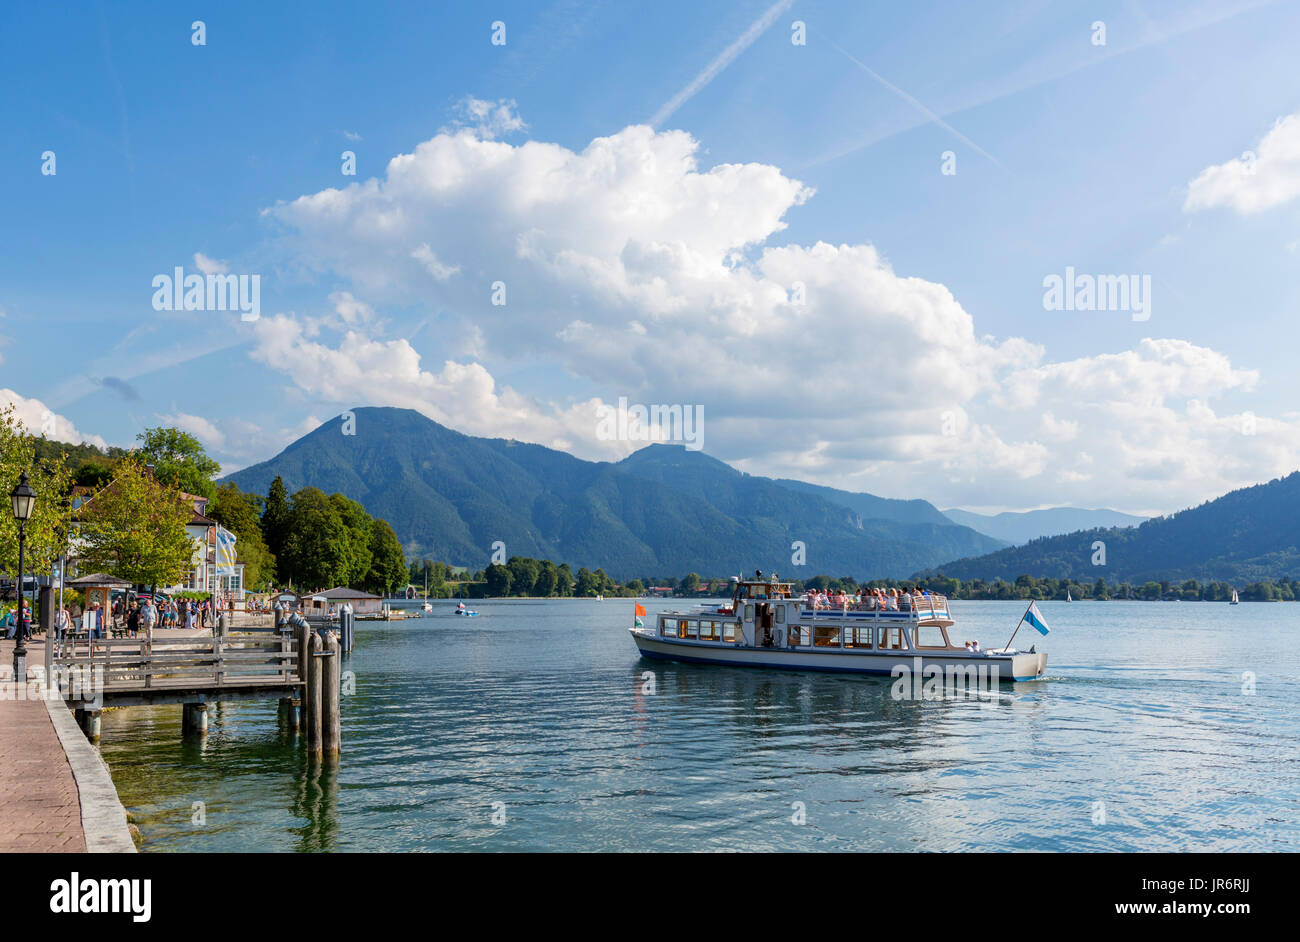 Cruise boat on Lake Tegernsee, Tegernsee, Bavaria, Germany Stock Photo